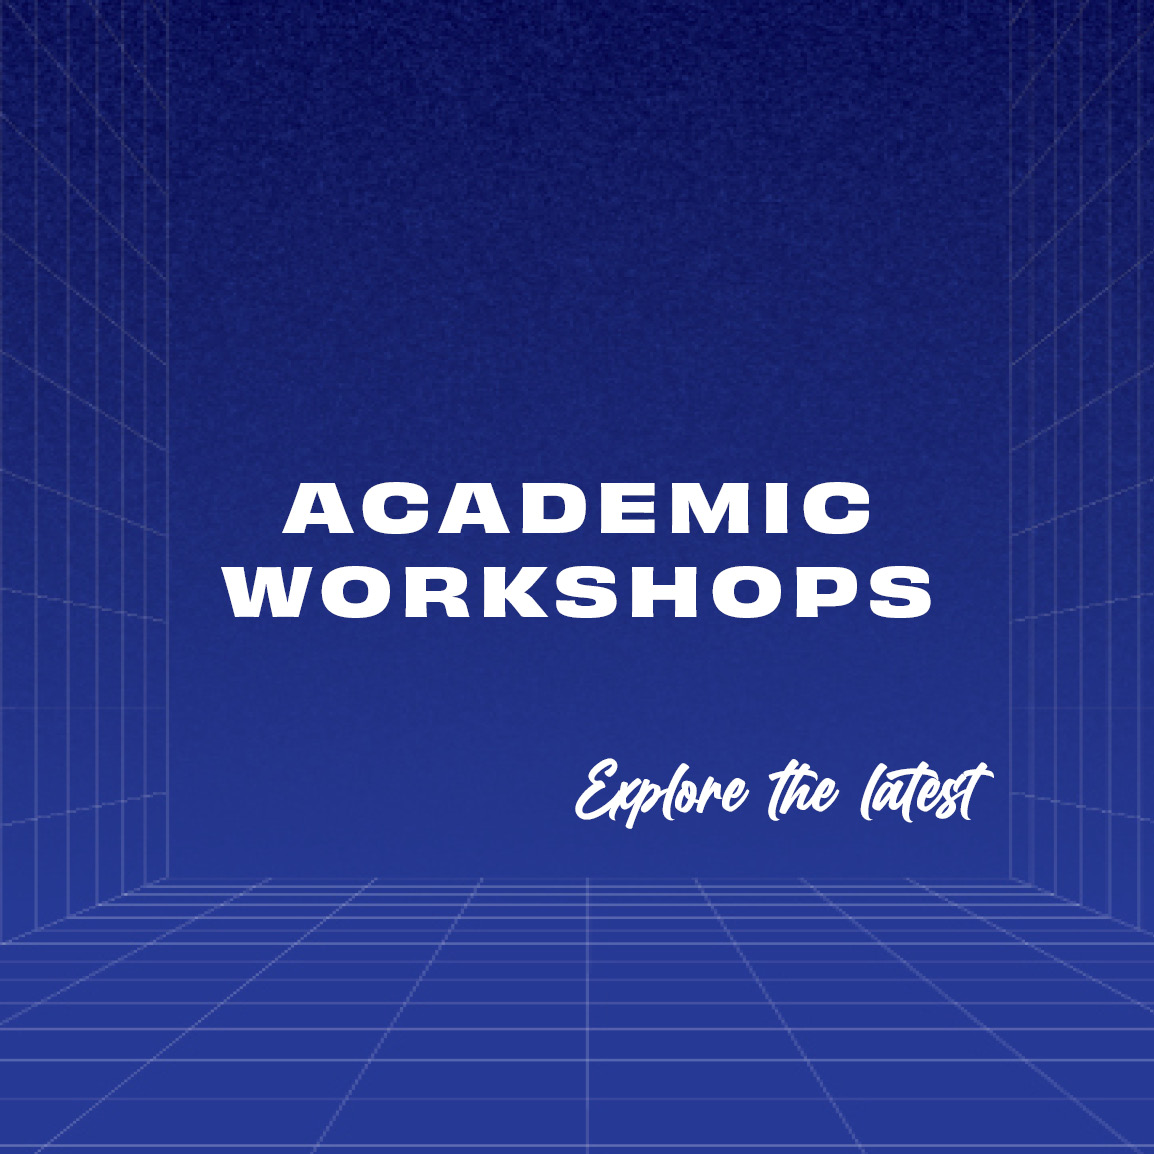 Academic Workshops- Explore the latest